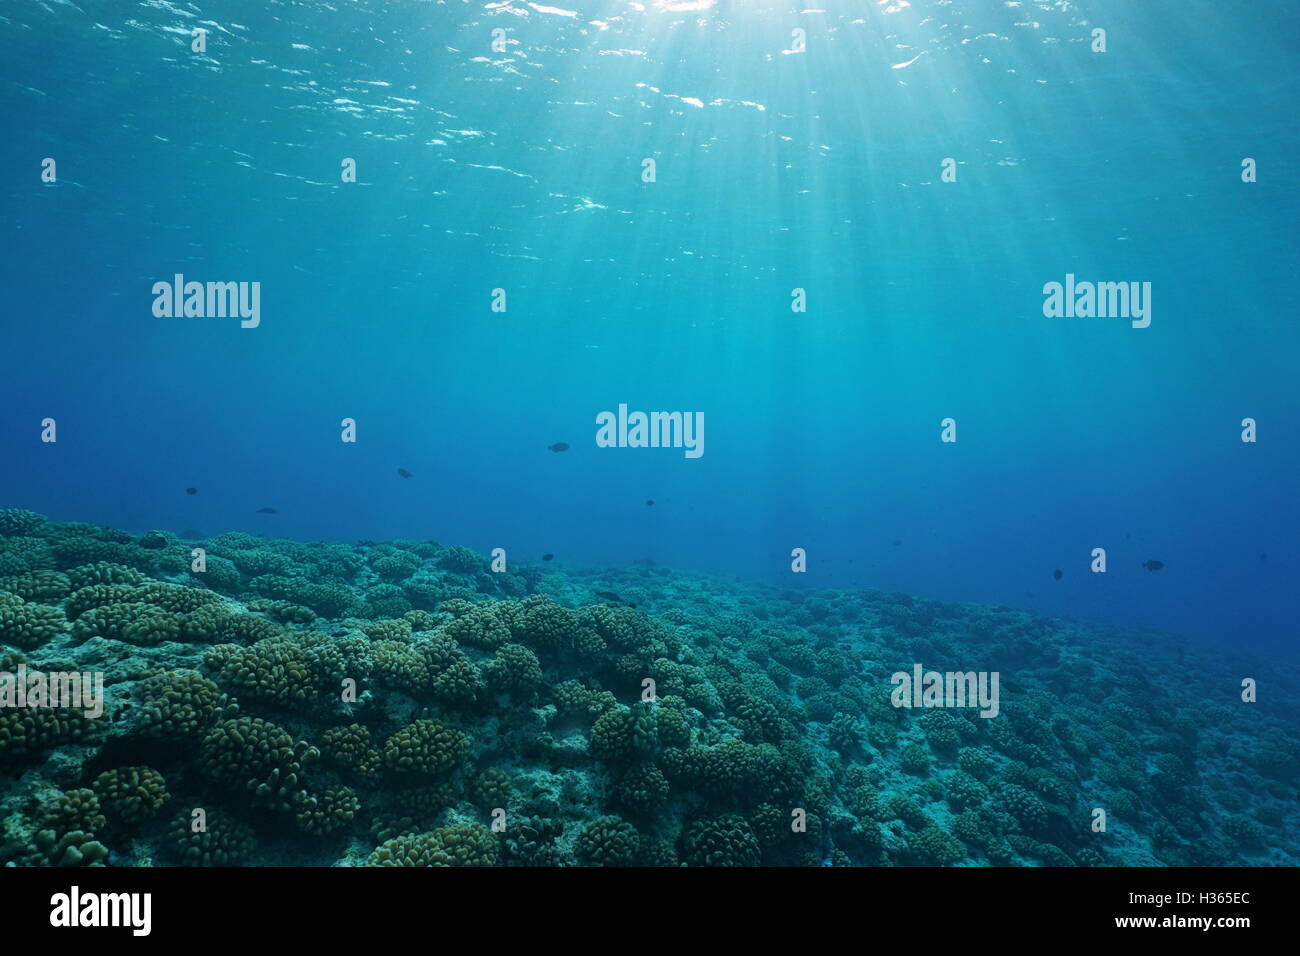 Underwater Coral Reef Ocean Floor con la luce del sole attraverso la superficie di acqua, scenario naturale, fore reef di Huahine isola, oceano pacifico Foto Stock